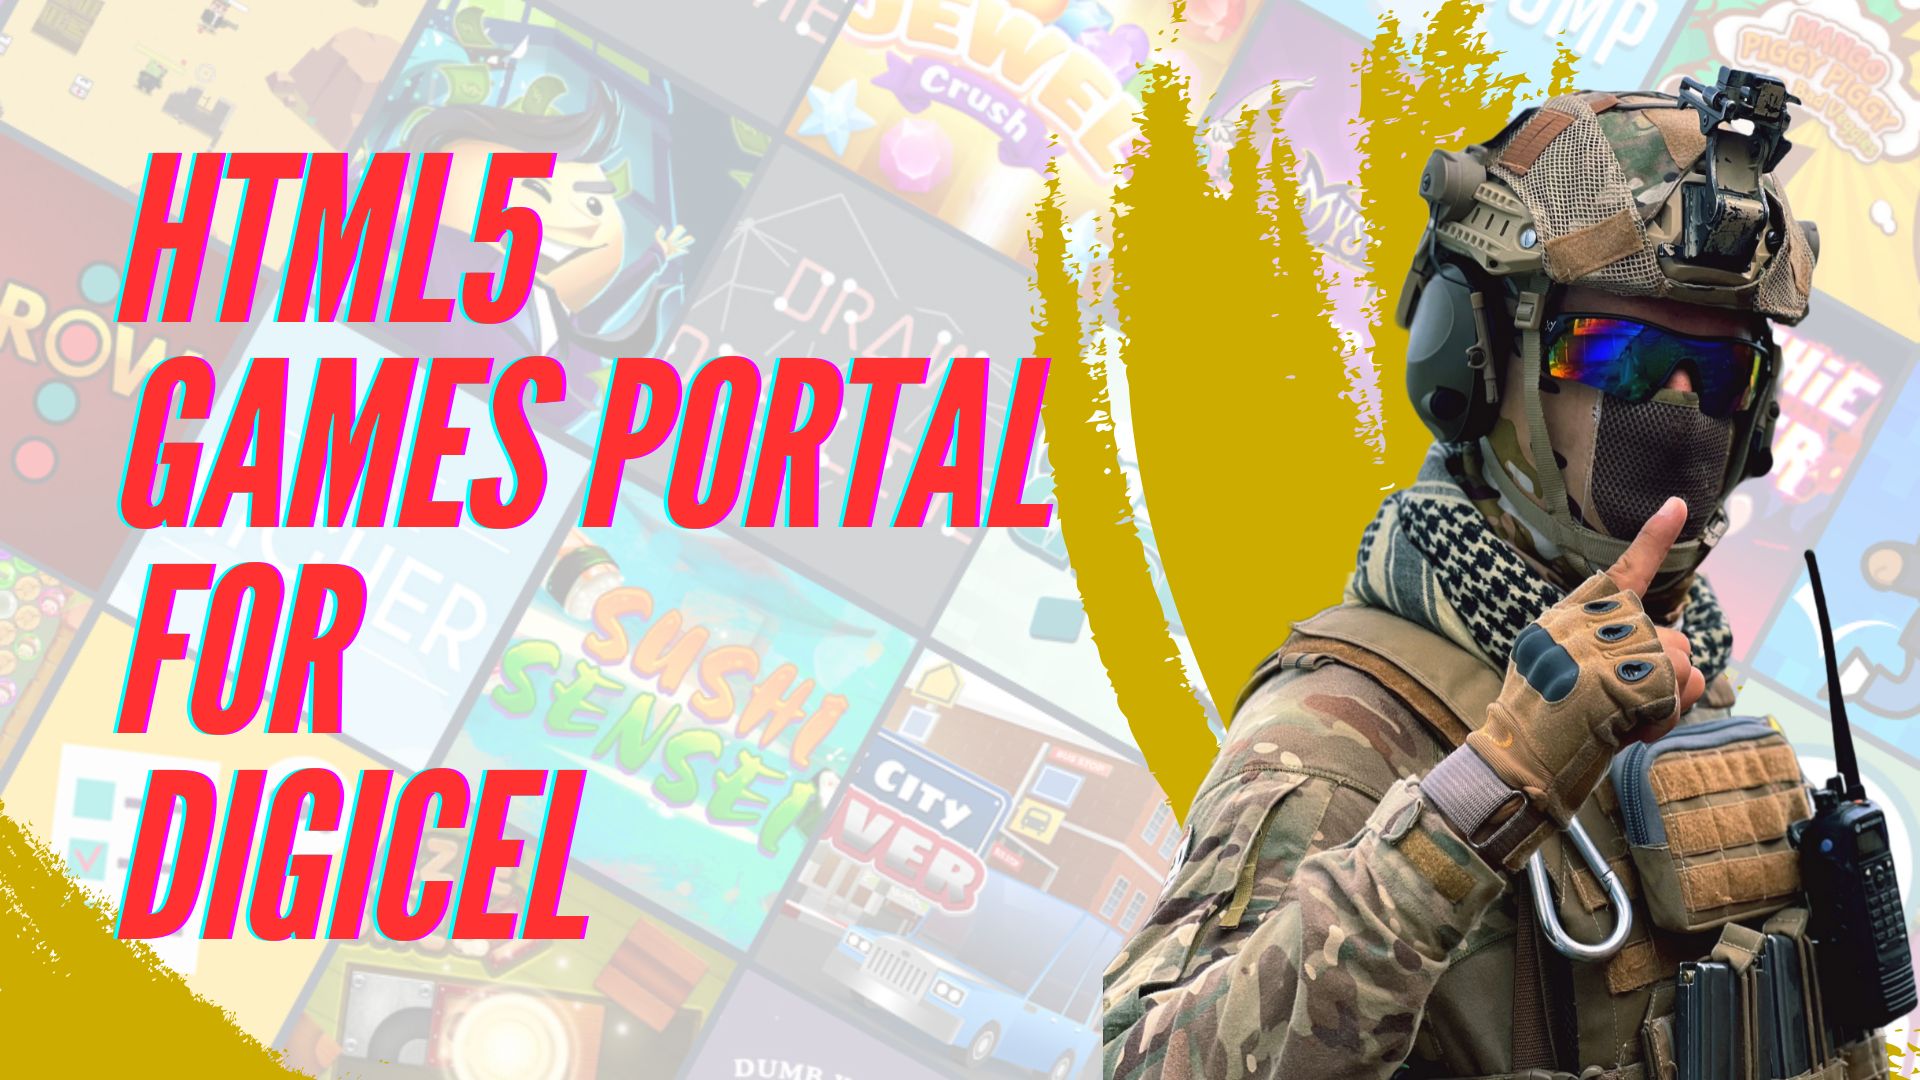 HTML5 Games Portal for Digicel